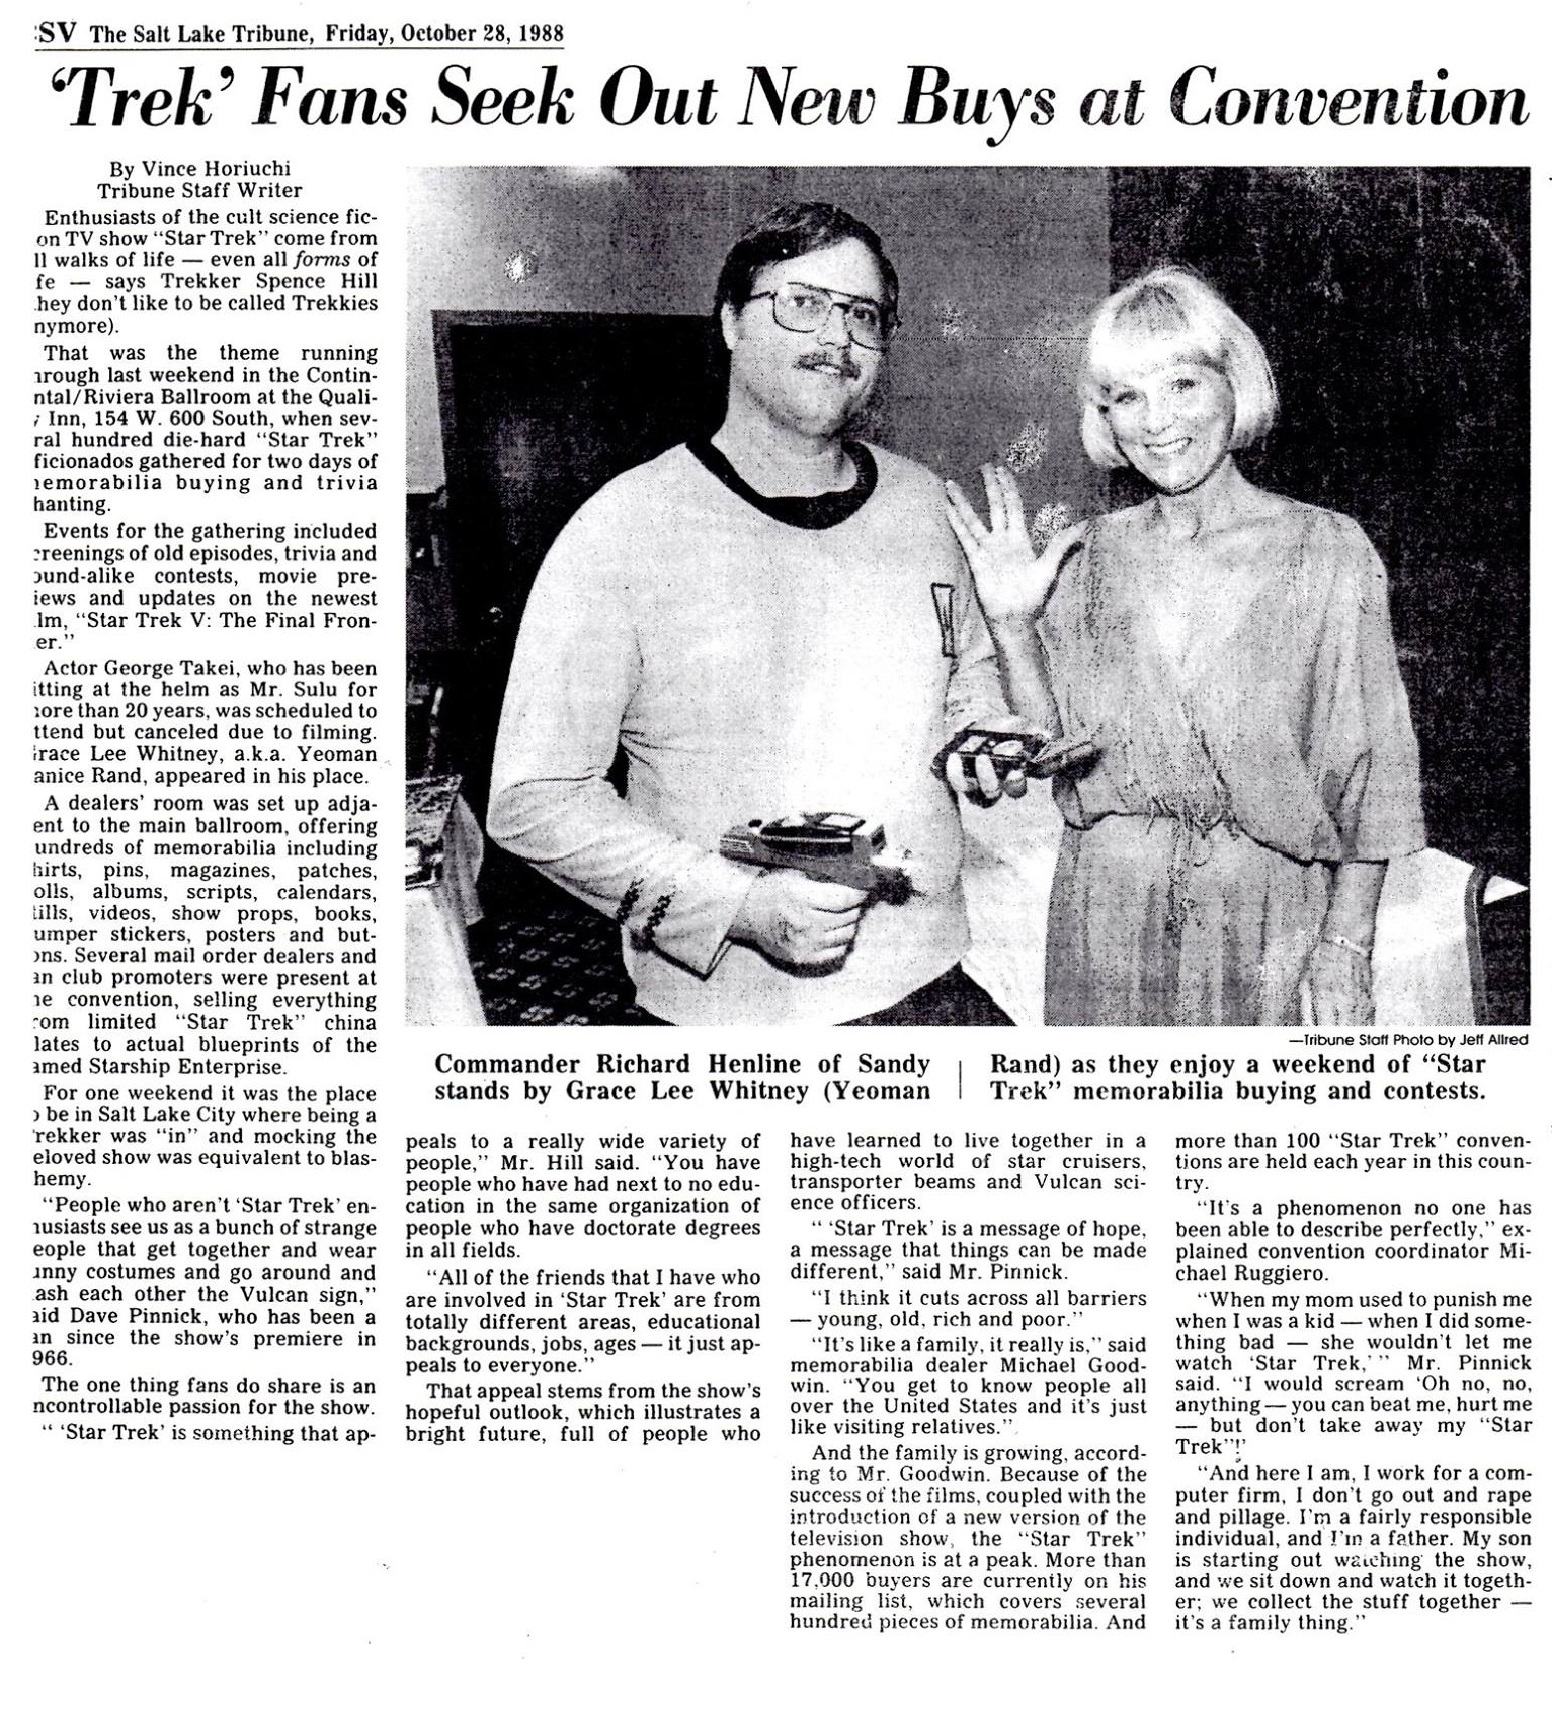 1988 Star Trek Convention in Salt Lake City